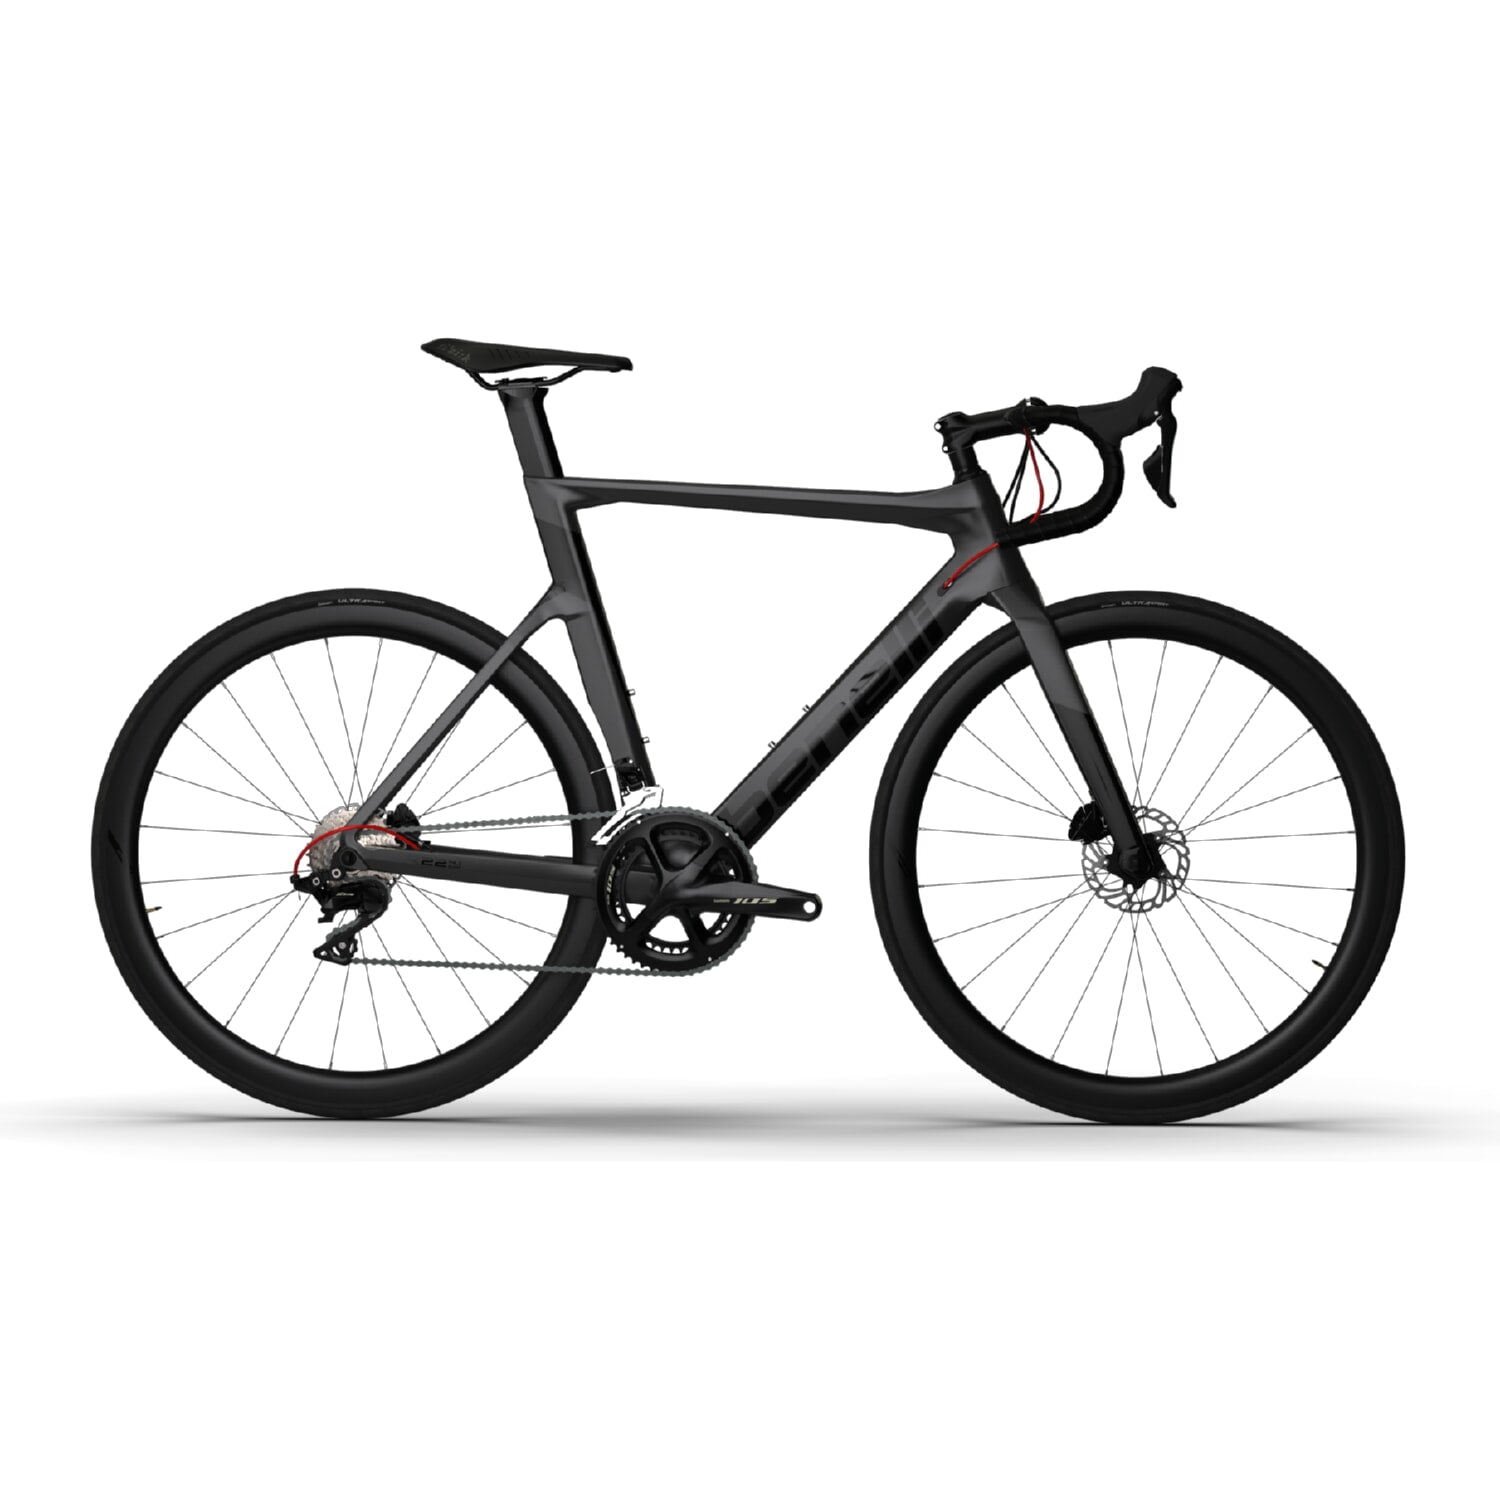 Bicicleta Ruta Benelli Carb. (R22 4.1 Exp Carb Disk) Gris oscuro/Negro Talla M